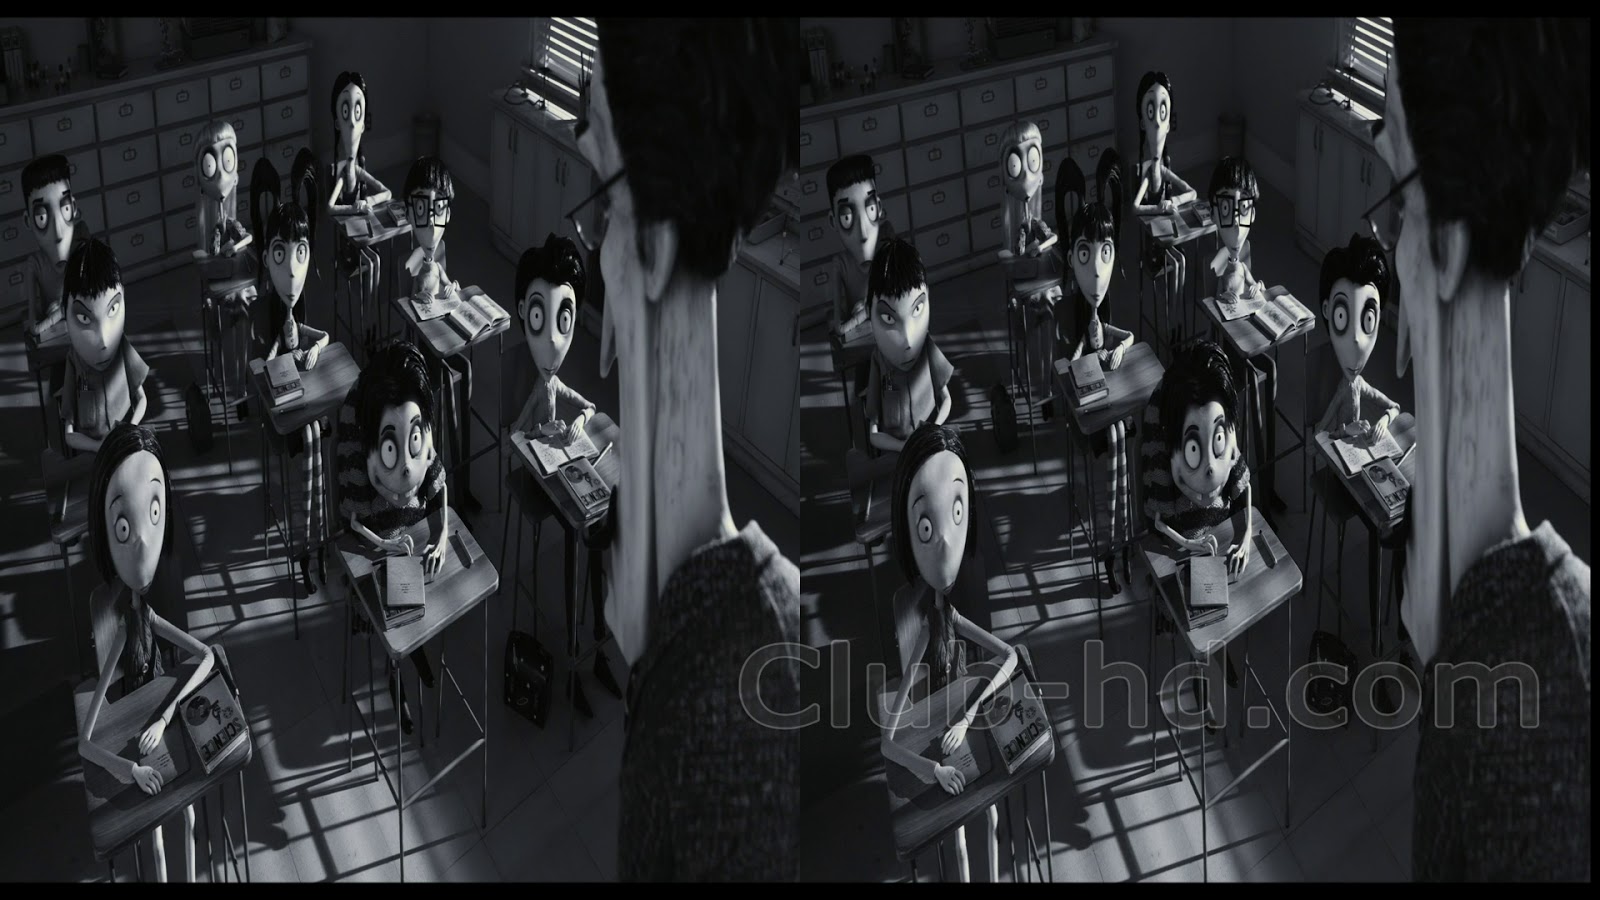 Frankenweenie (2012) 3D H-SBS 1080p BDRip Dual Latino-Inglés [Subt. Esp-Ing] (Animation)